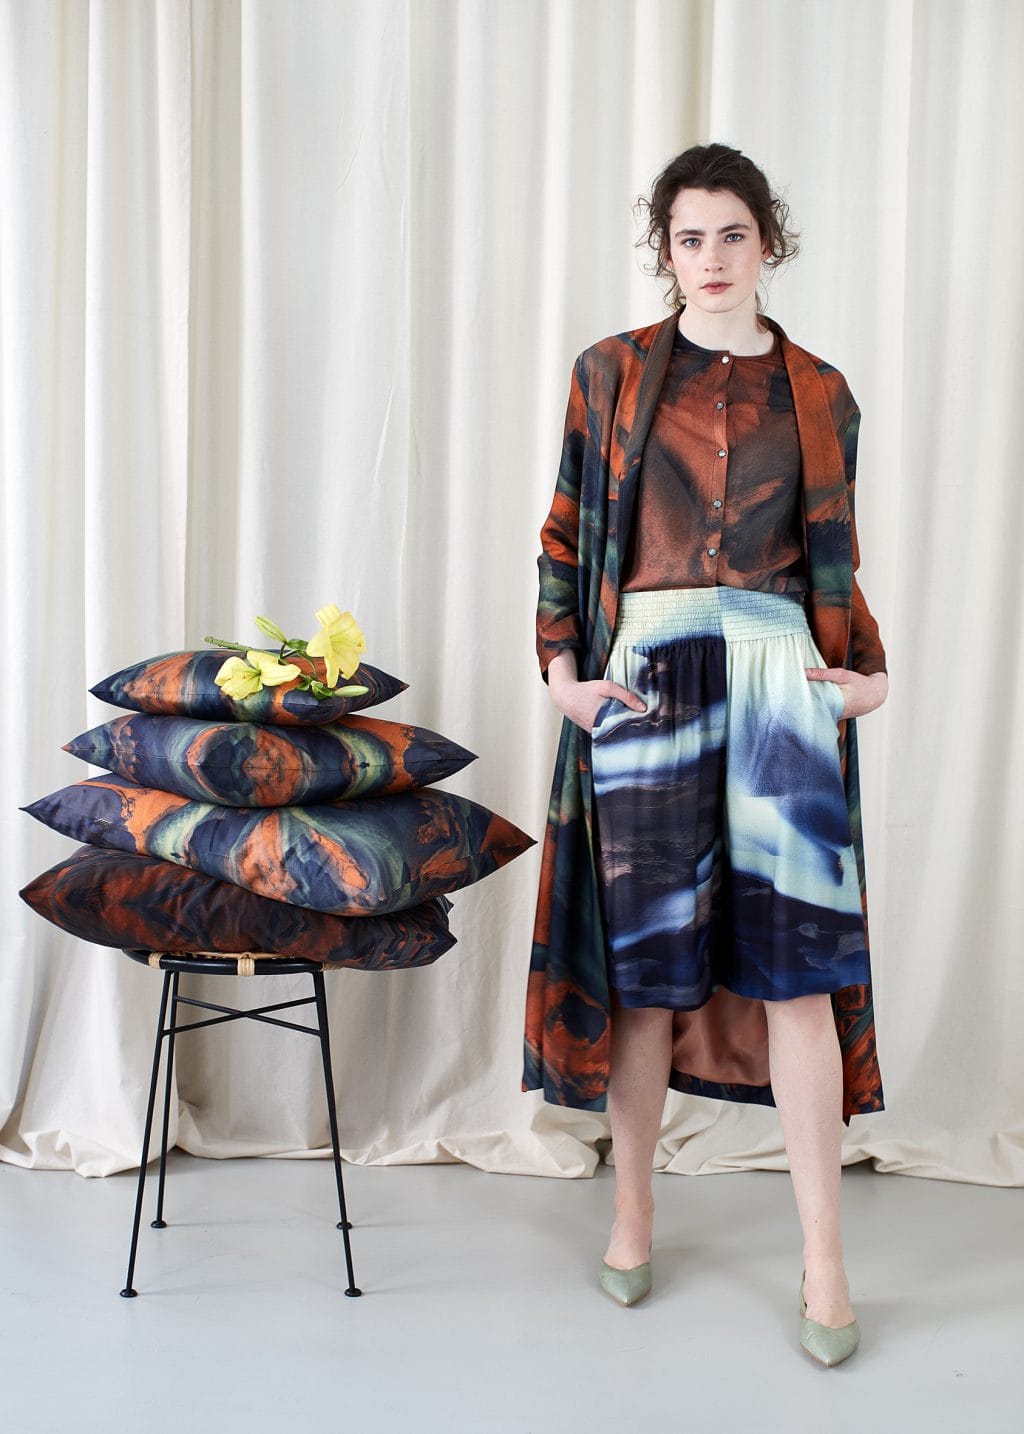 Eva Poleschinski homewear collection Indoor + Outside - THE Stylemate